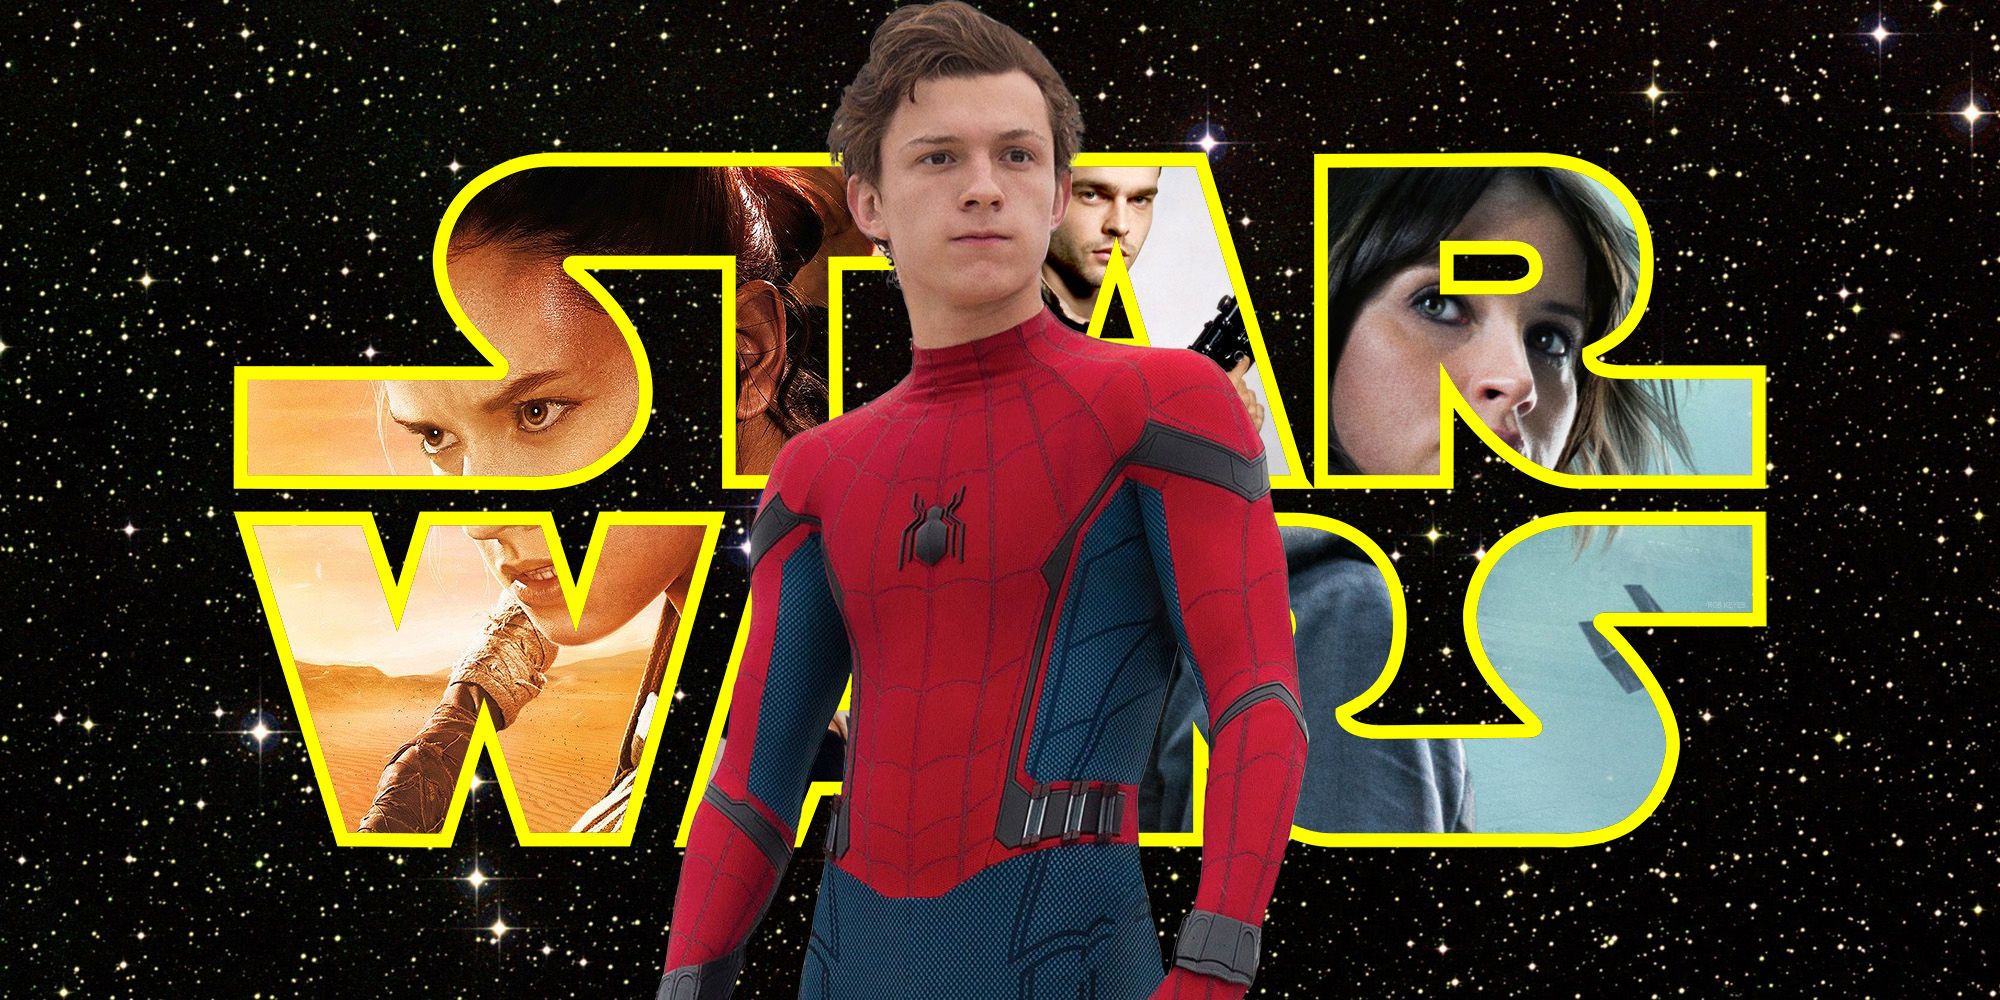 Tom-Holland-as-Peter-Parker-Spider-Man-Star-Wars-logo